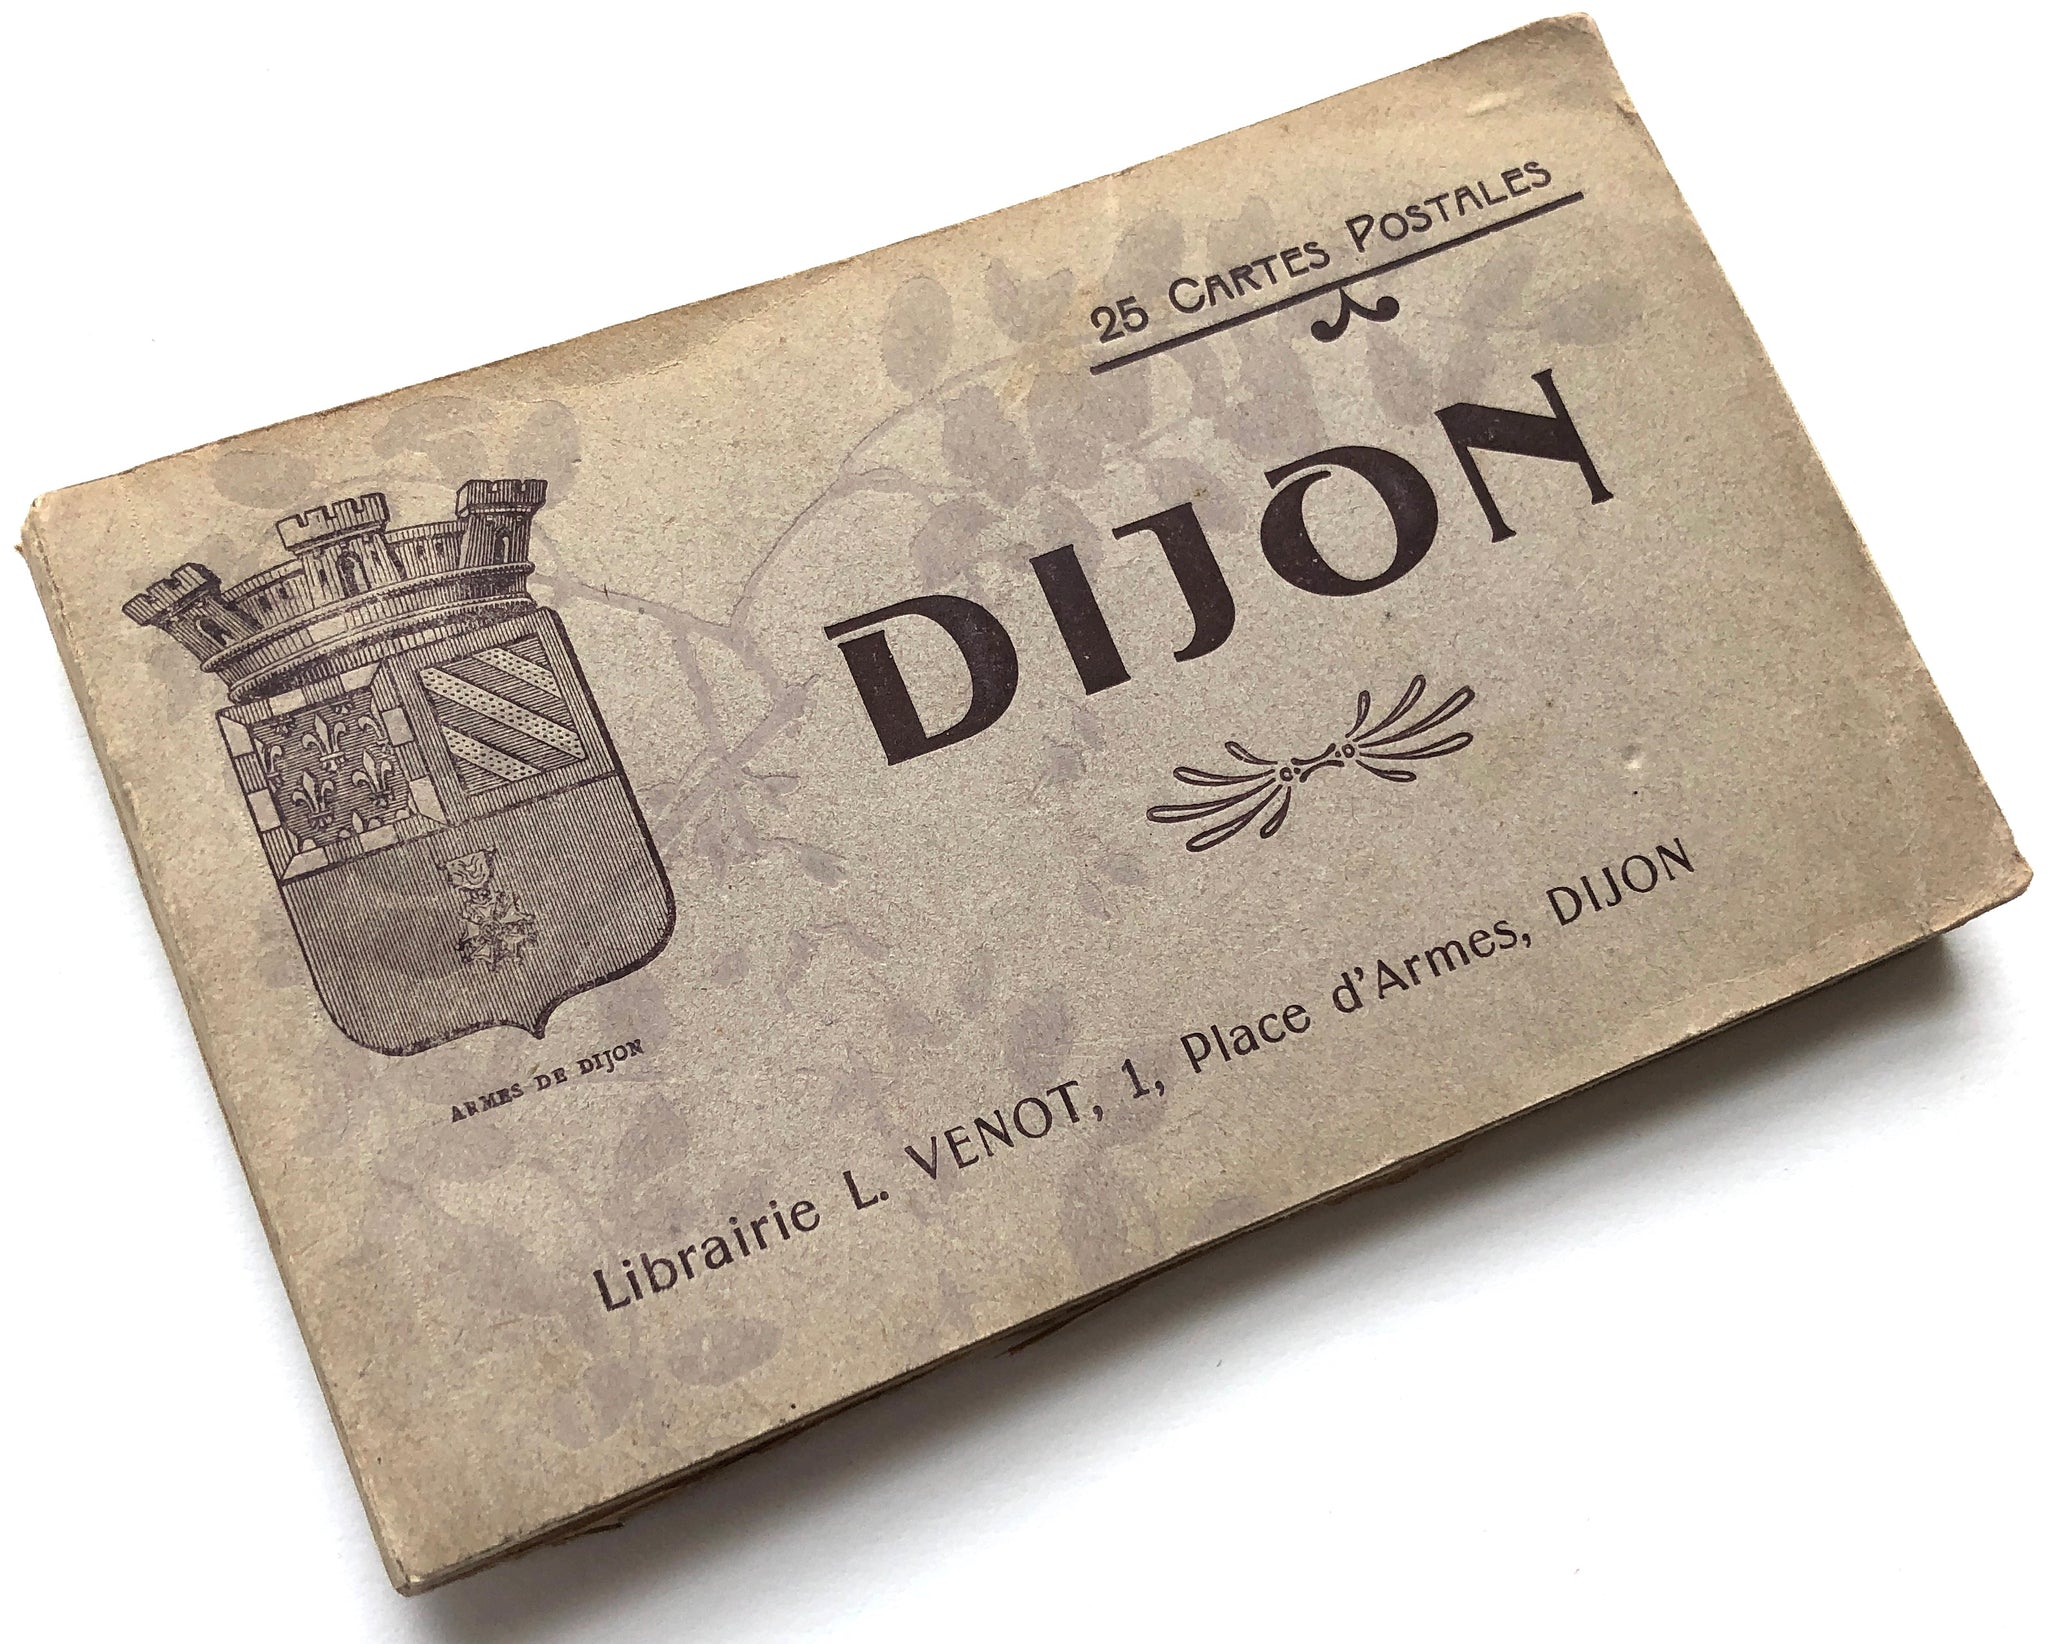 Dijon: 25 Cartes Postales